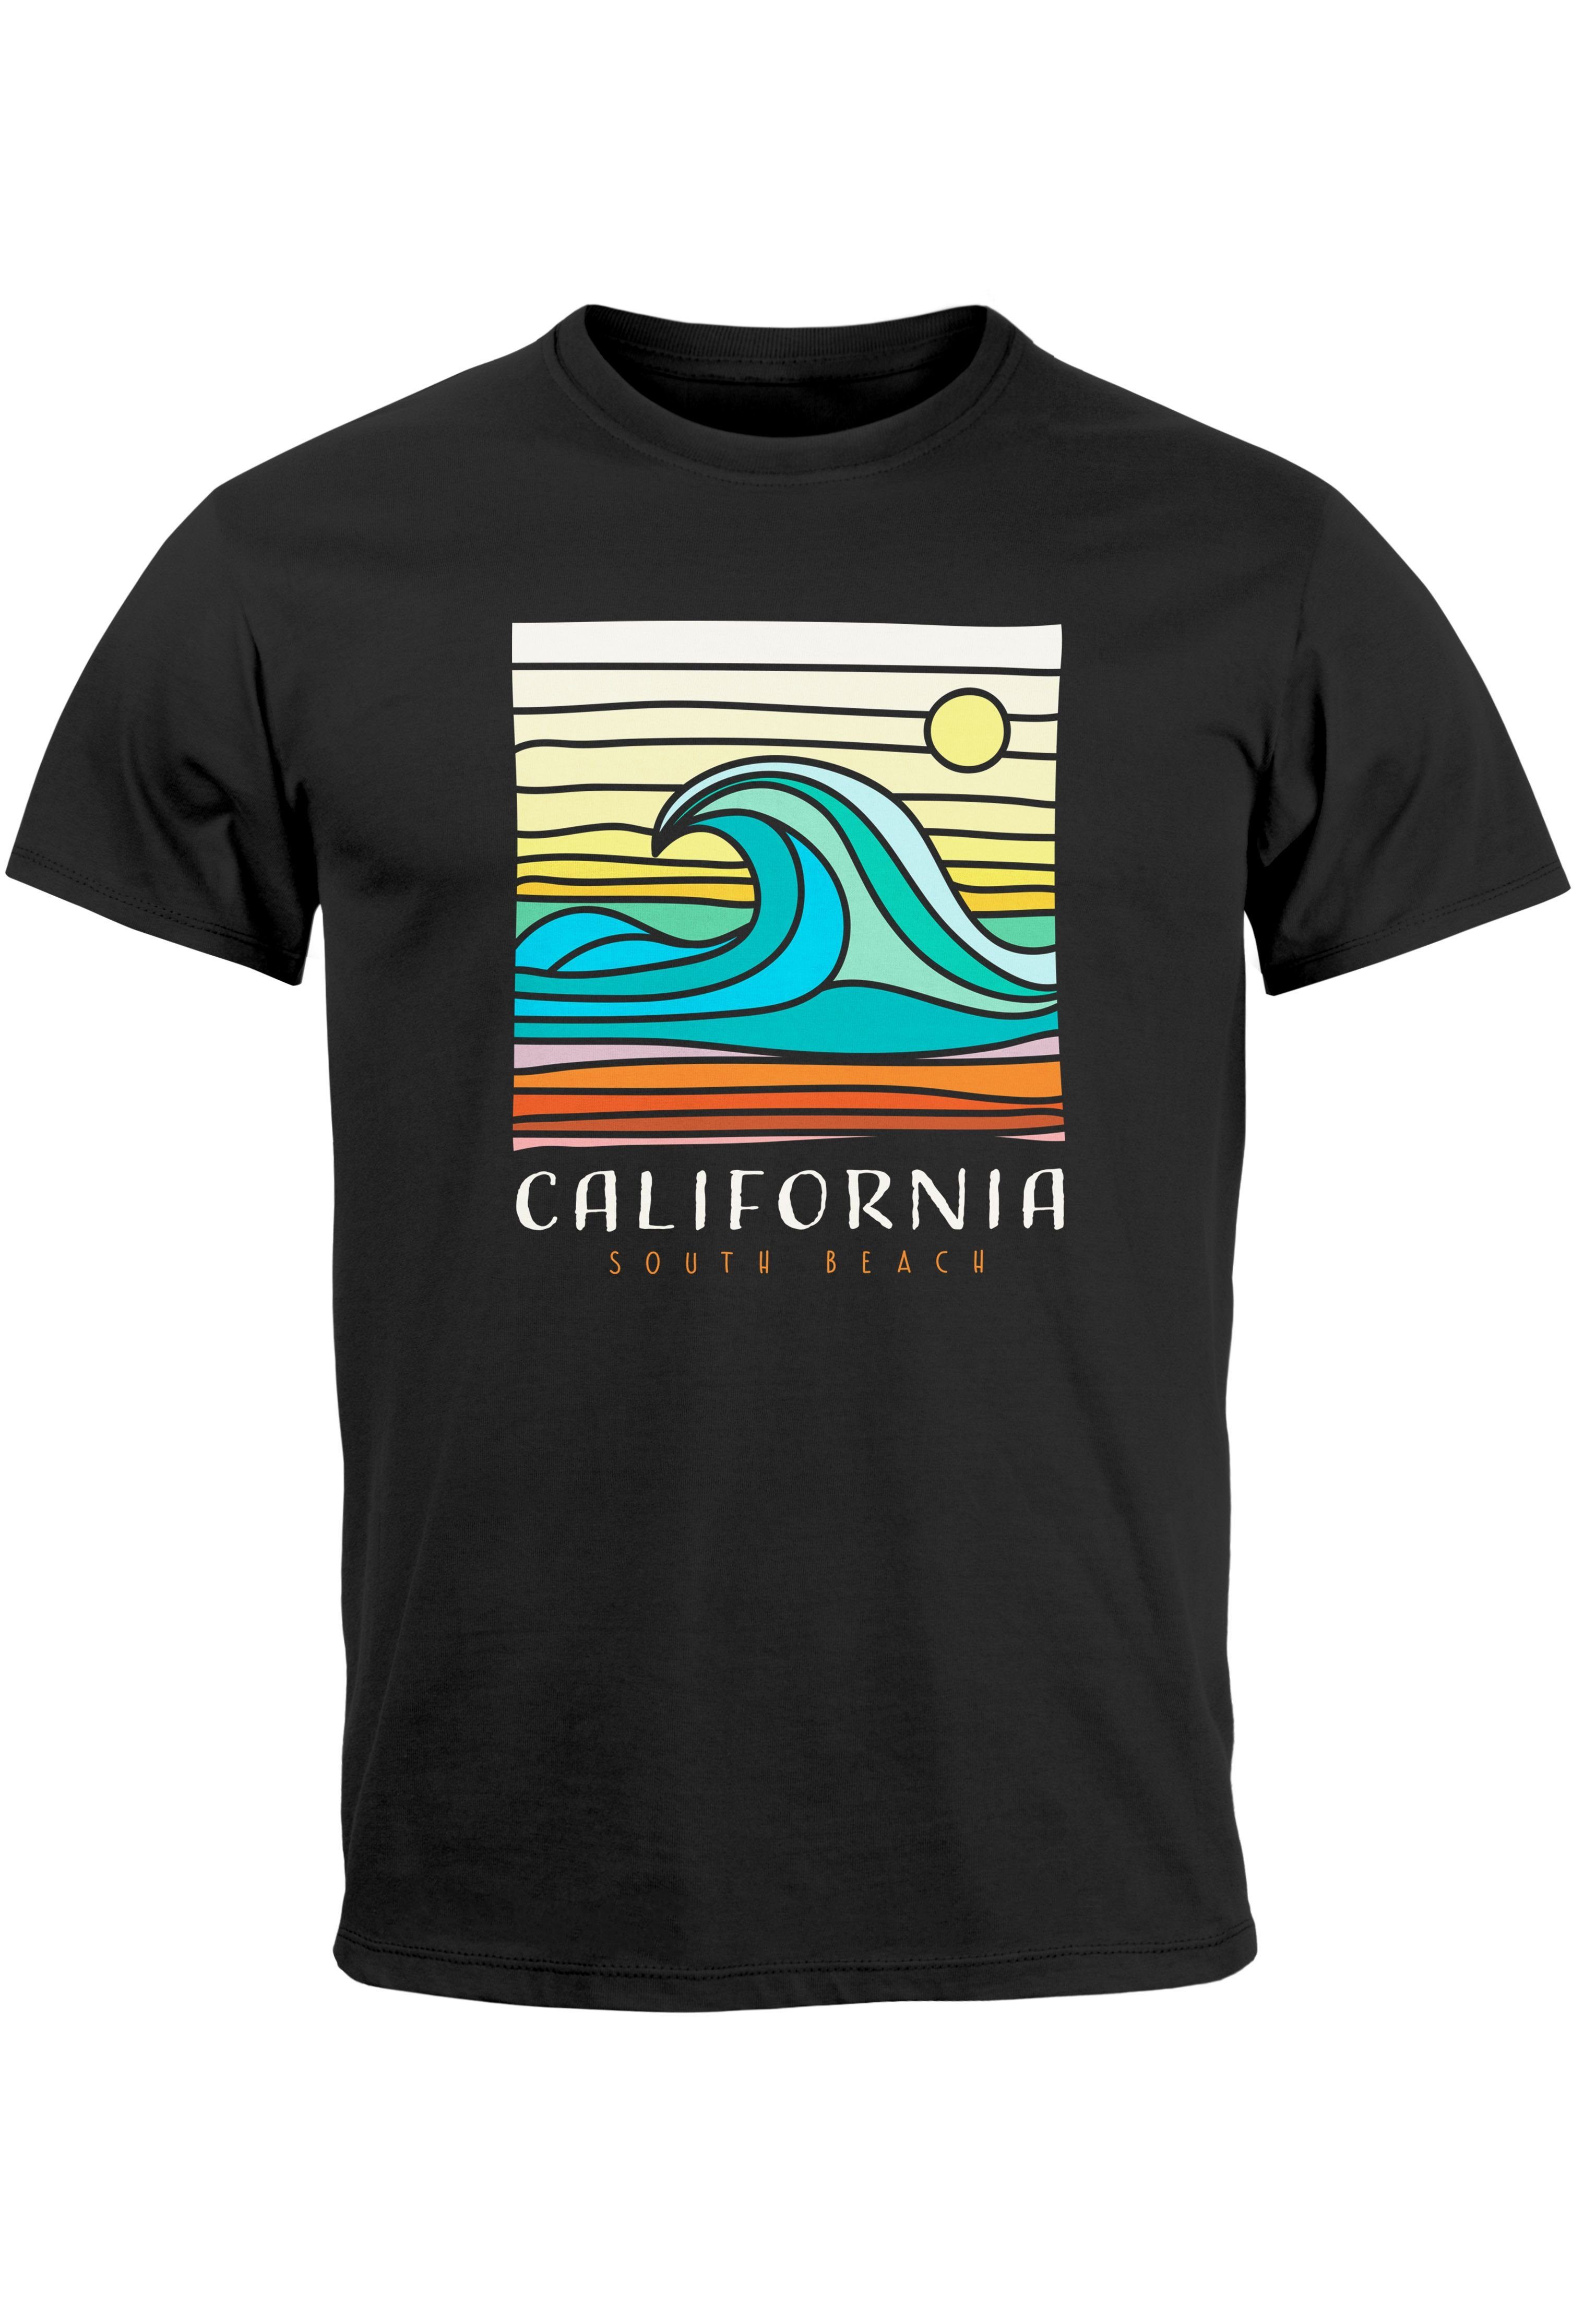 Neverless Print-Shirt Herren T-Shirt California South Beach Welle Wave Surfing Print Aufdruc mit Print schwarz